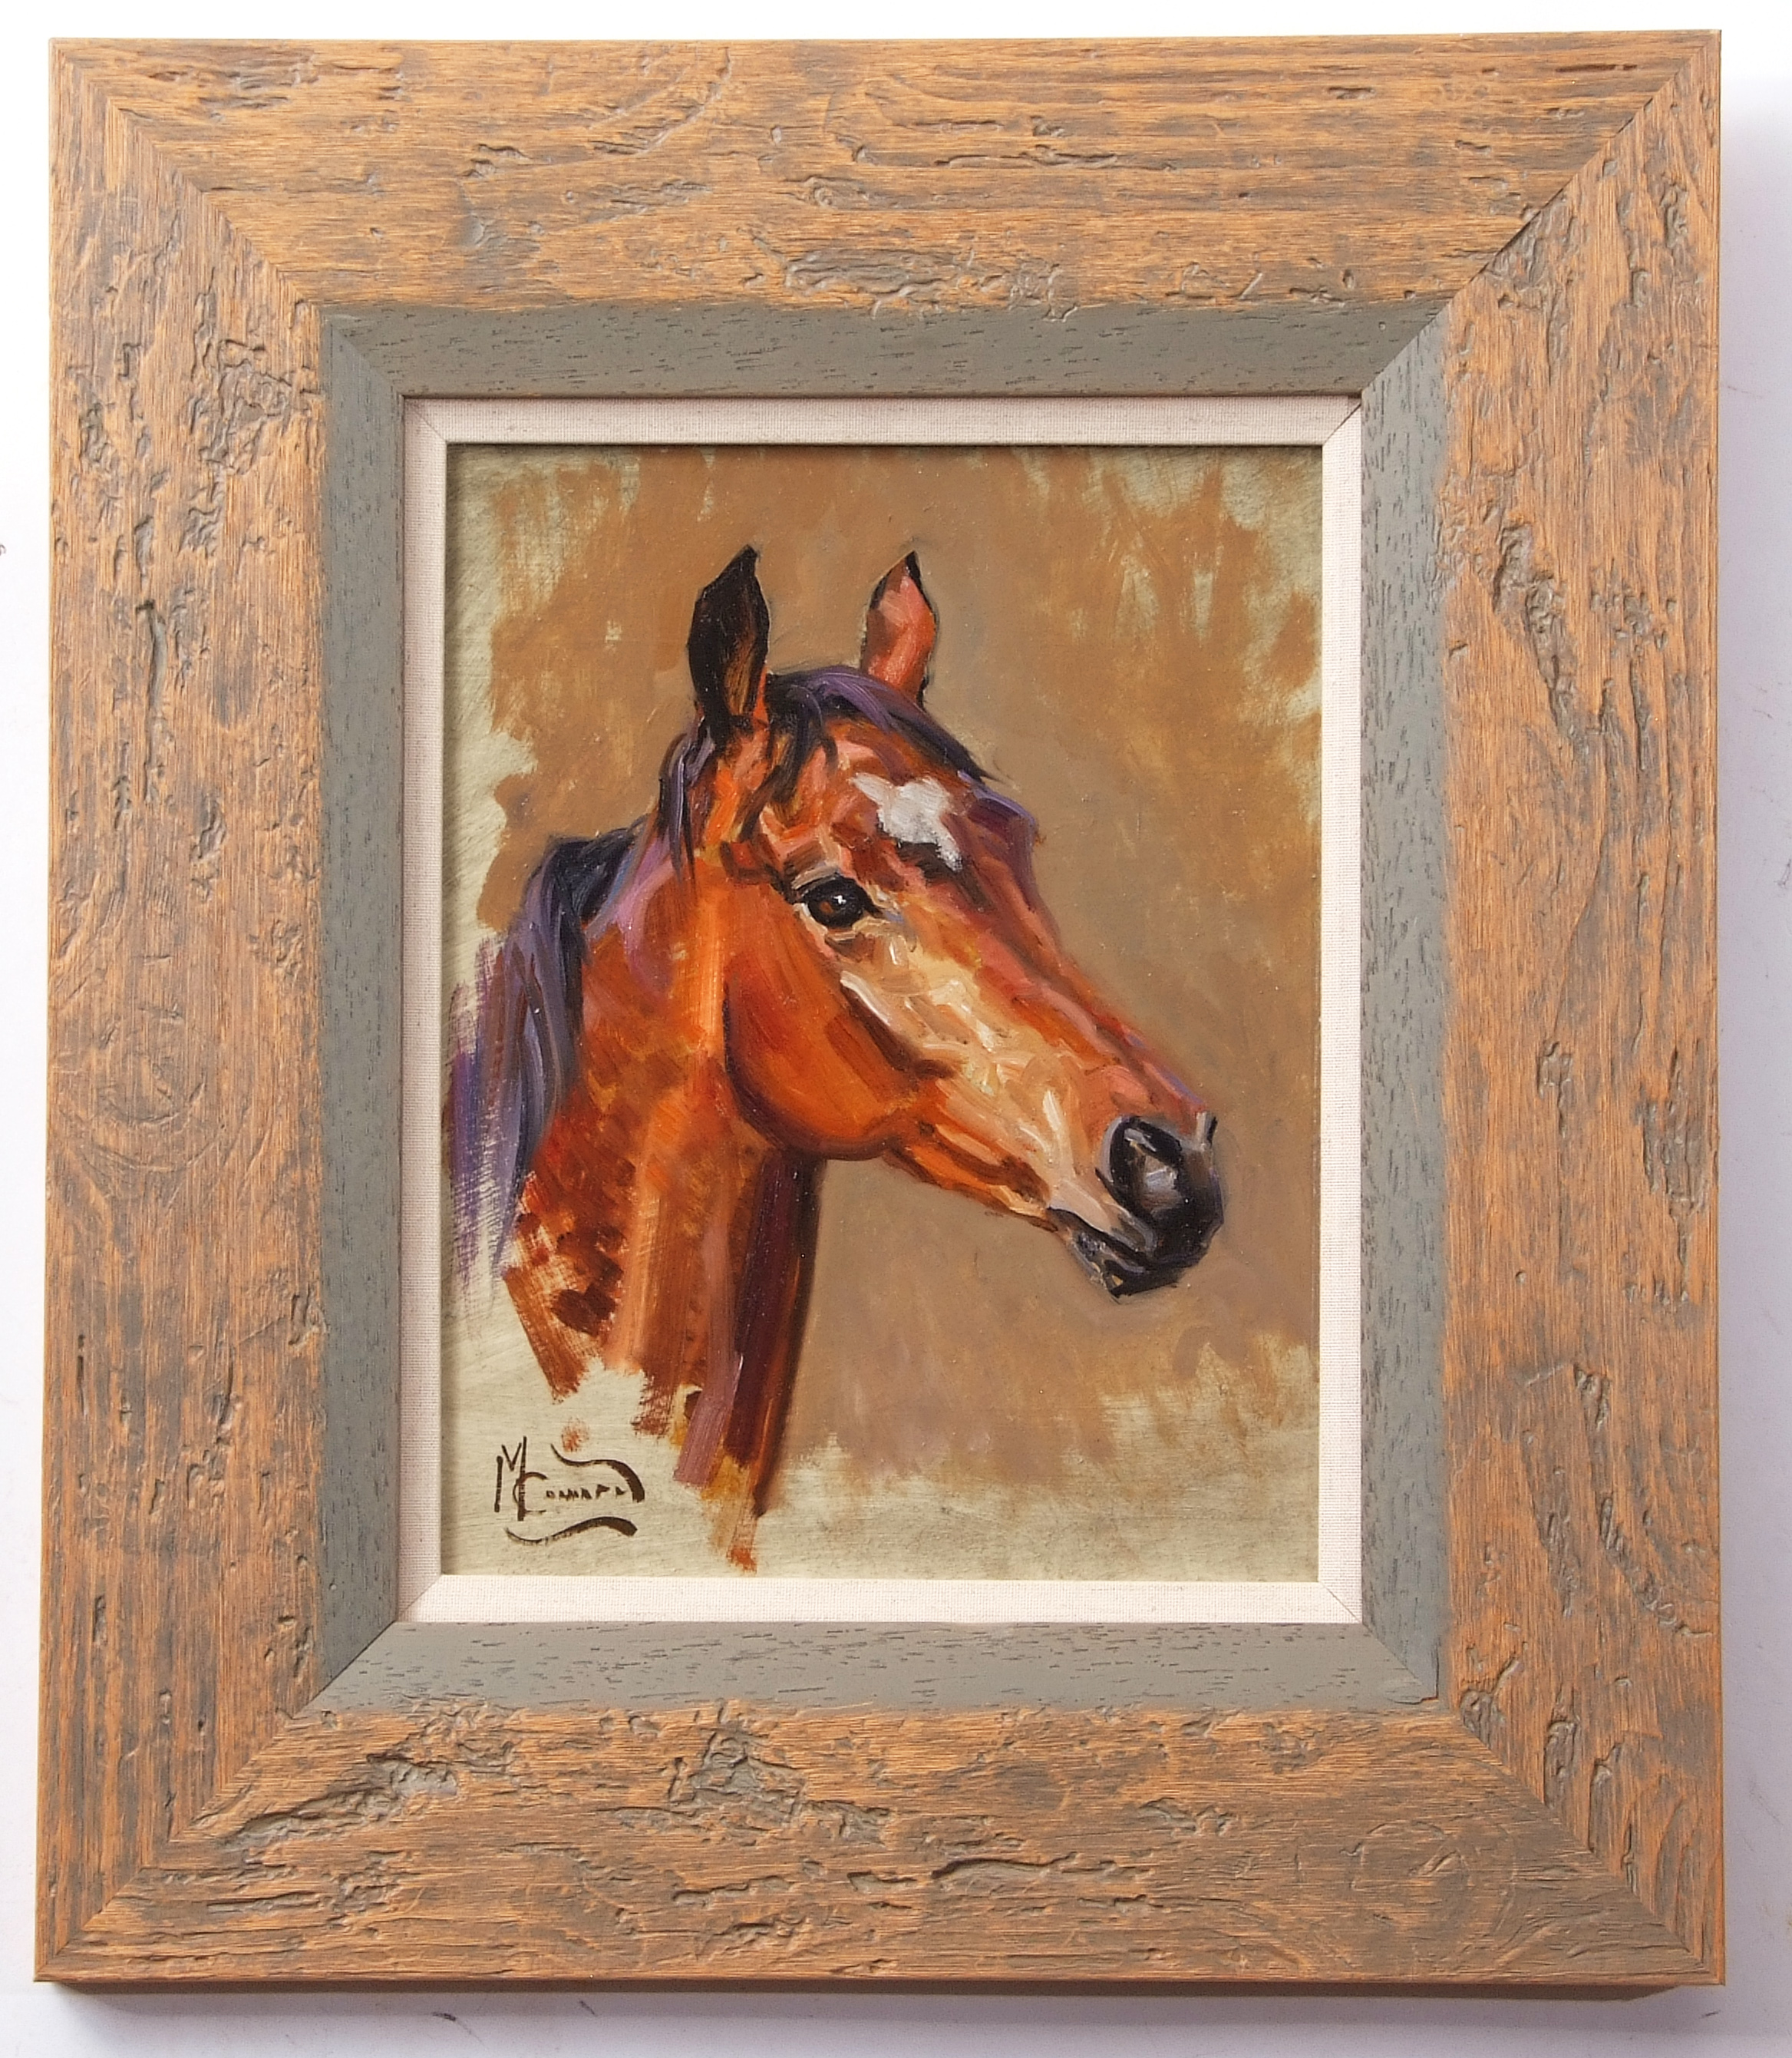 Malcolm Coward (born 1948), Horses head oil on board, signed lower left, 27 x 21cm